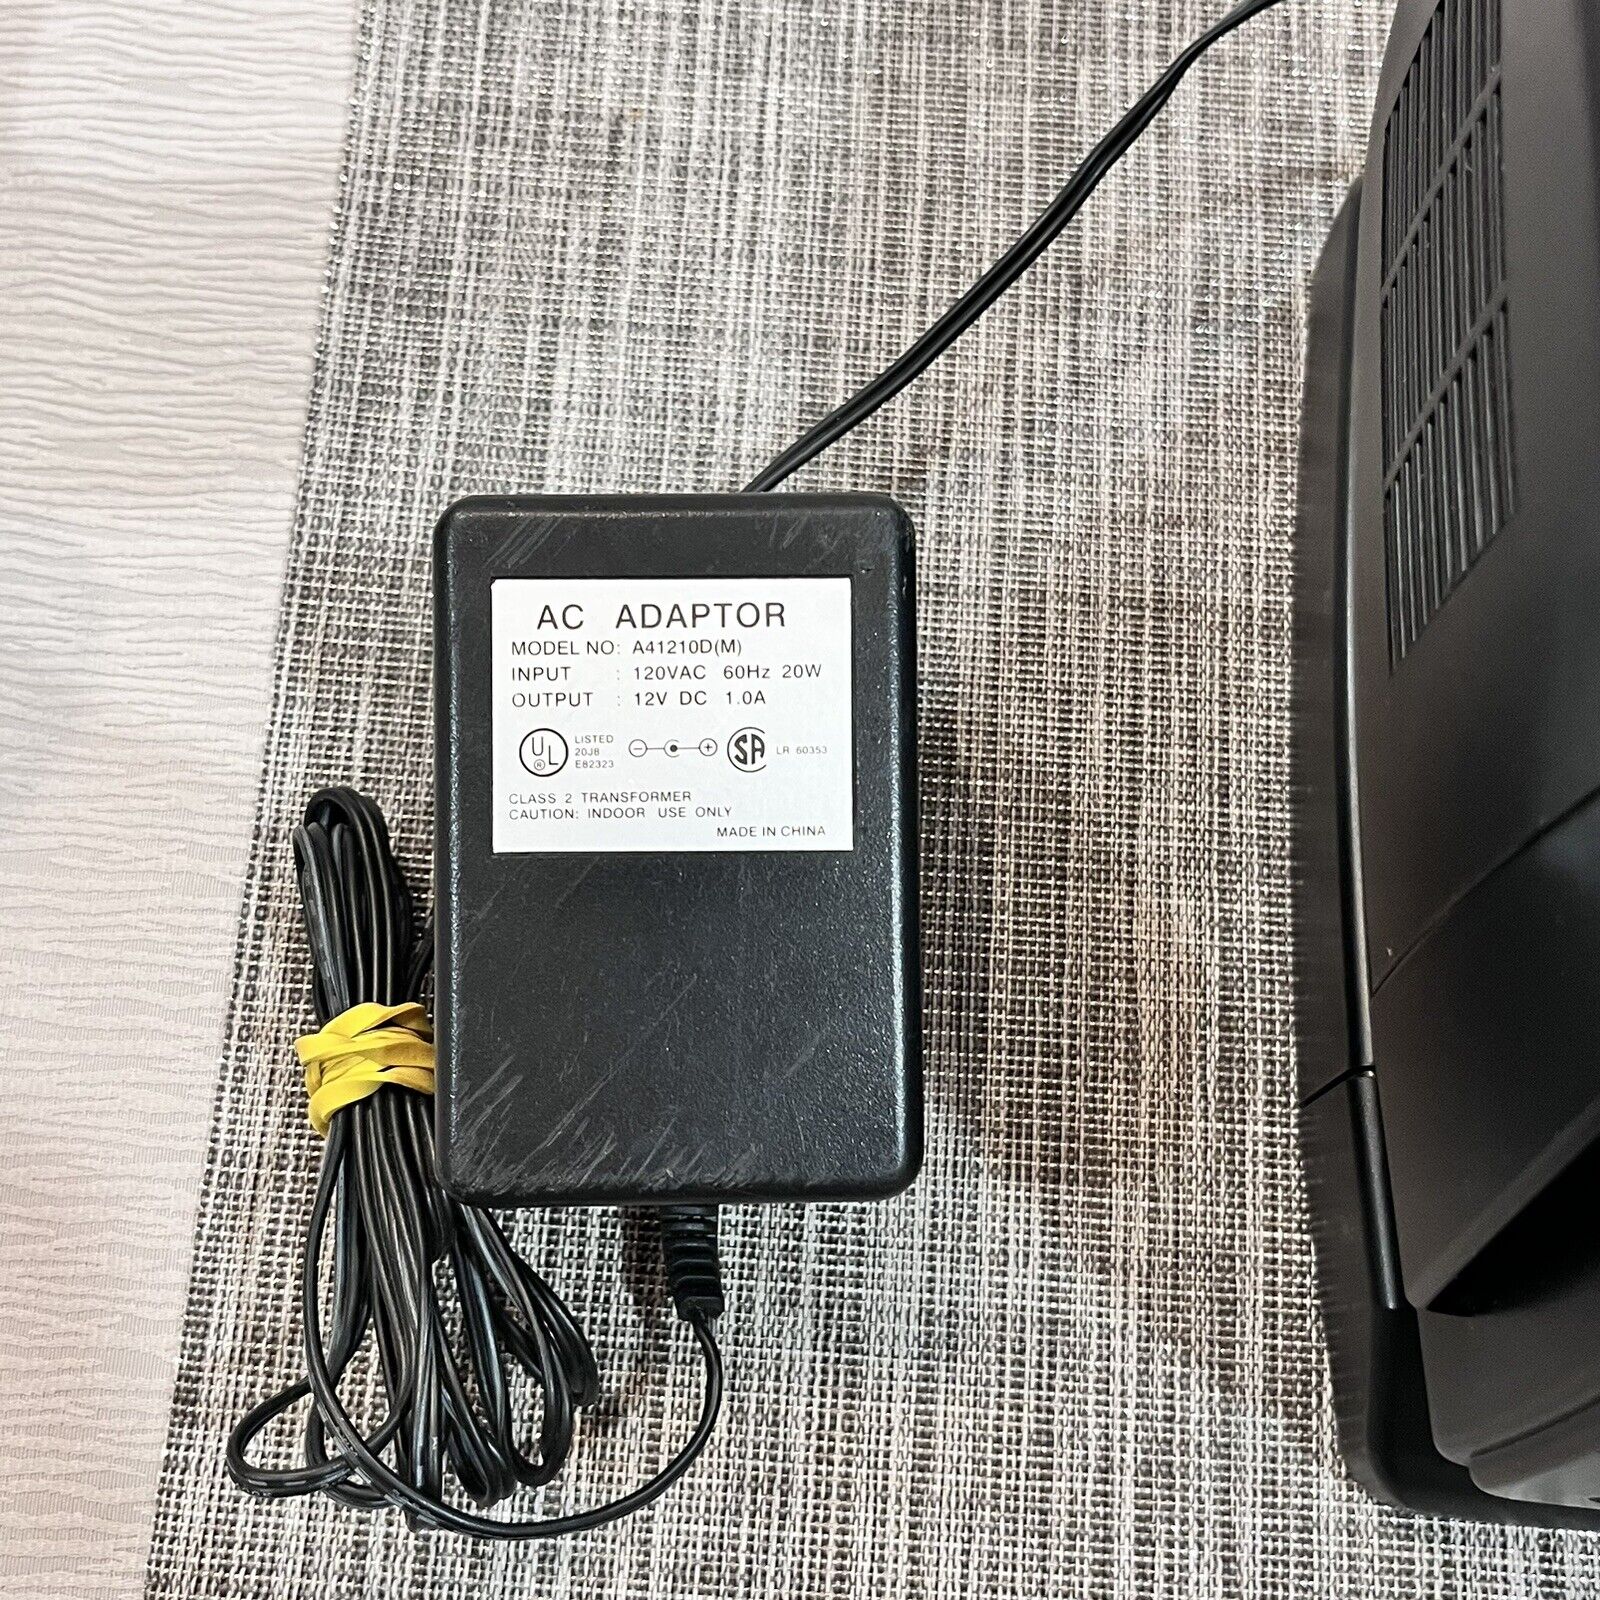 Memorex 5.5 Inch Black & White TV Plus AM/FM Radio Model MT0500 Tested/Working